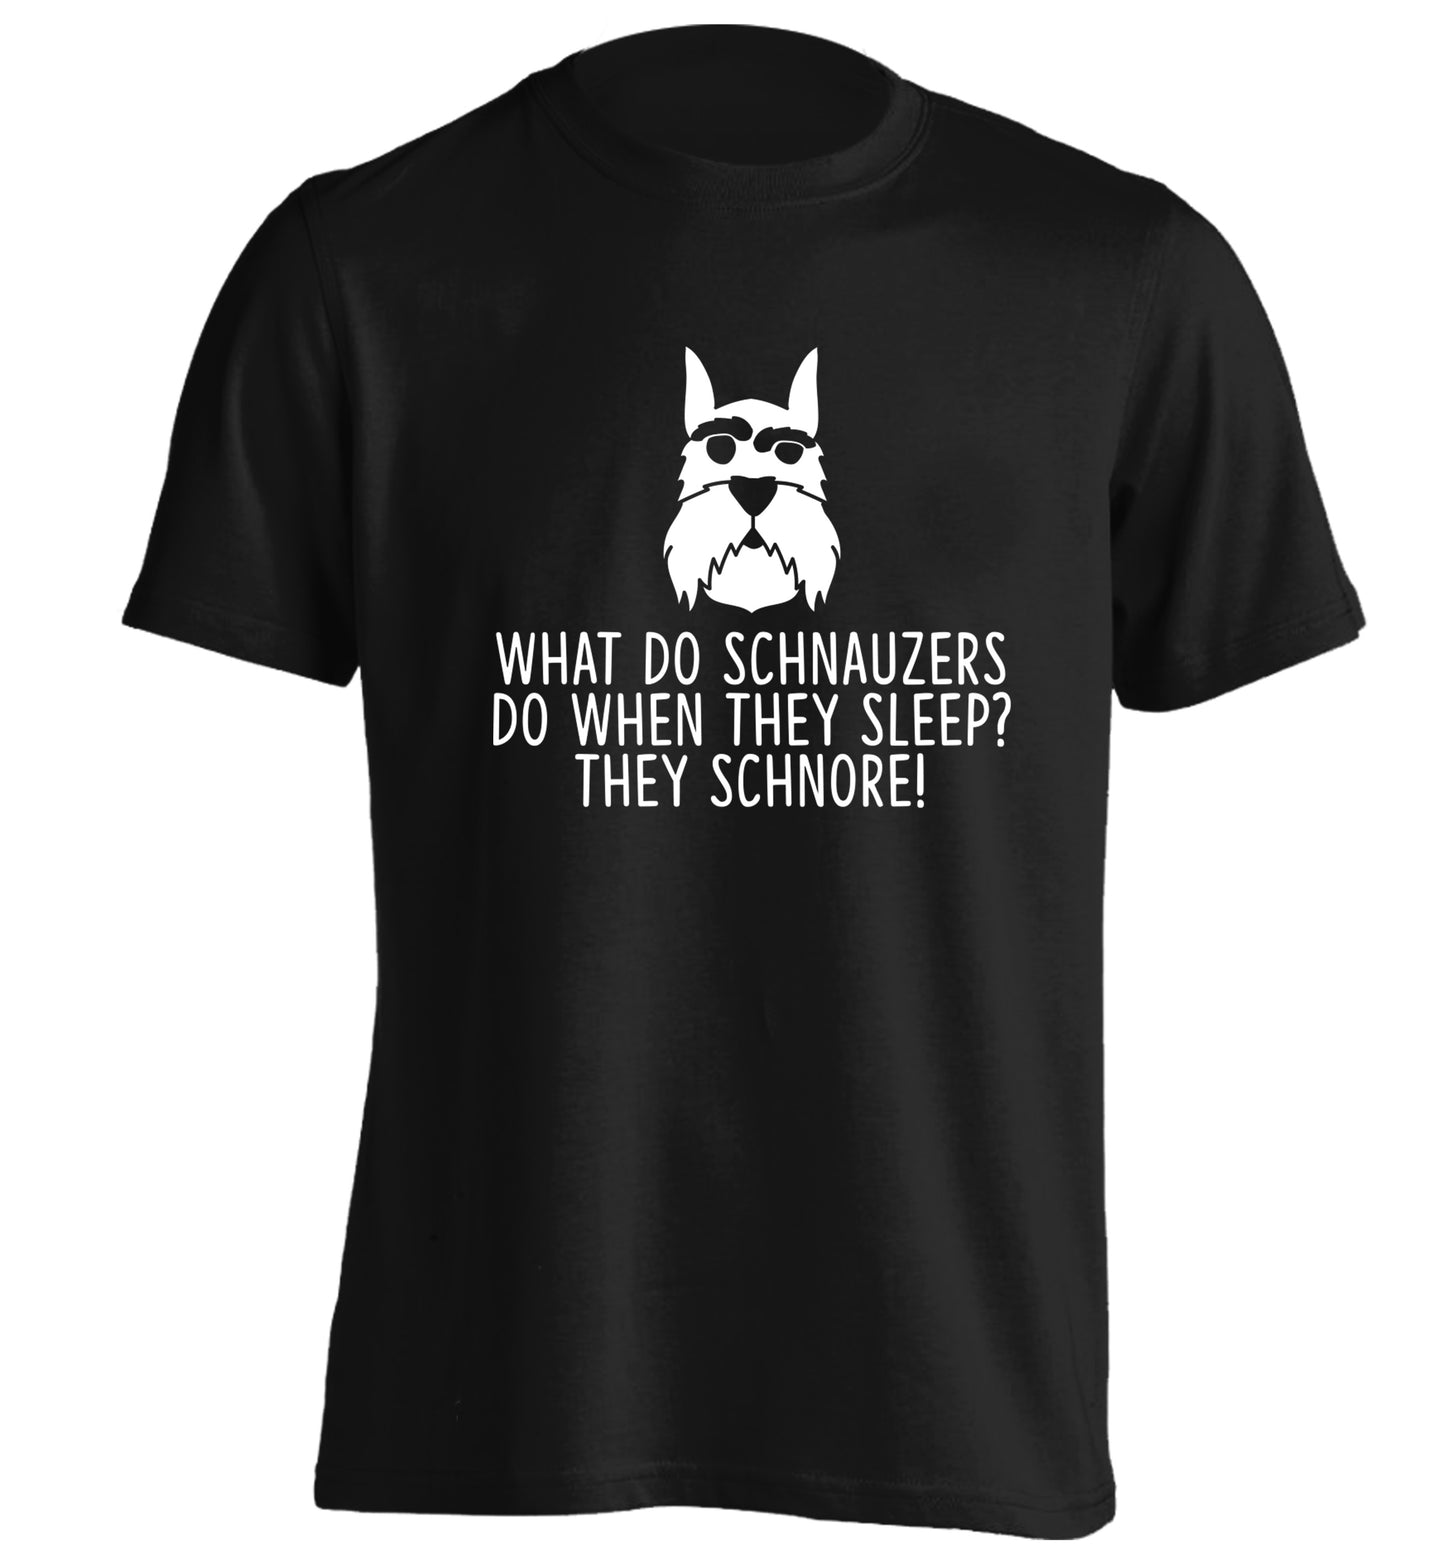 What do schnauzers do when they sleep? Schnore! adults unisex black Tshirt 2XL